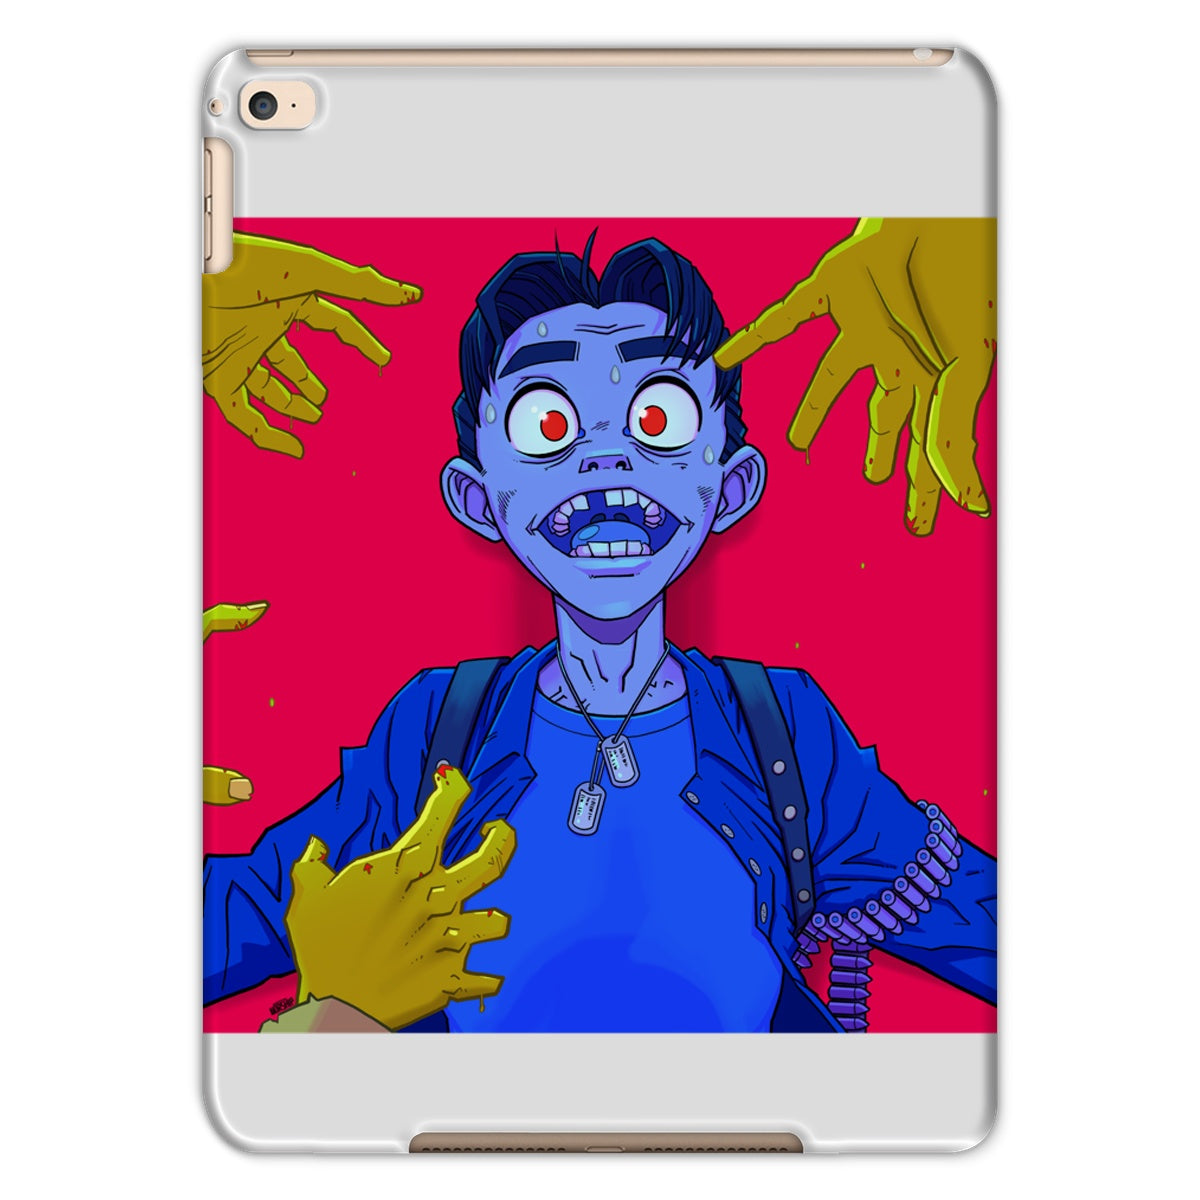 Unique and cool Gorillaz-style Zombie Tablet Case illustration 